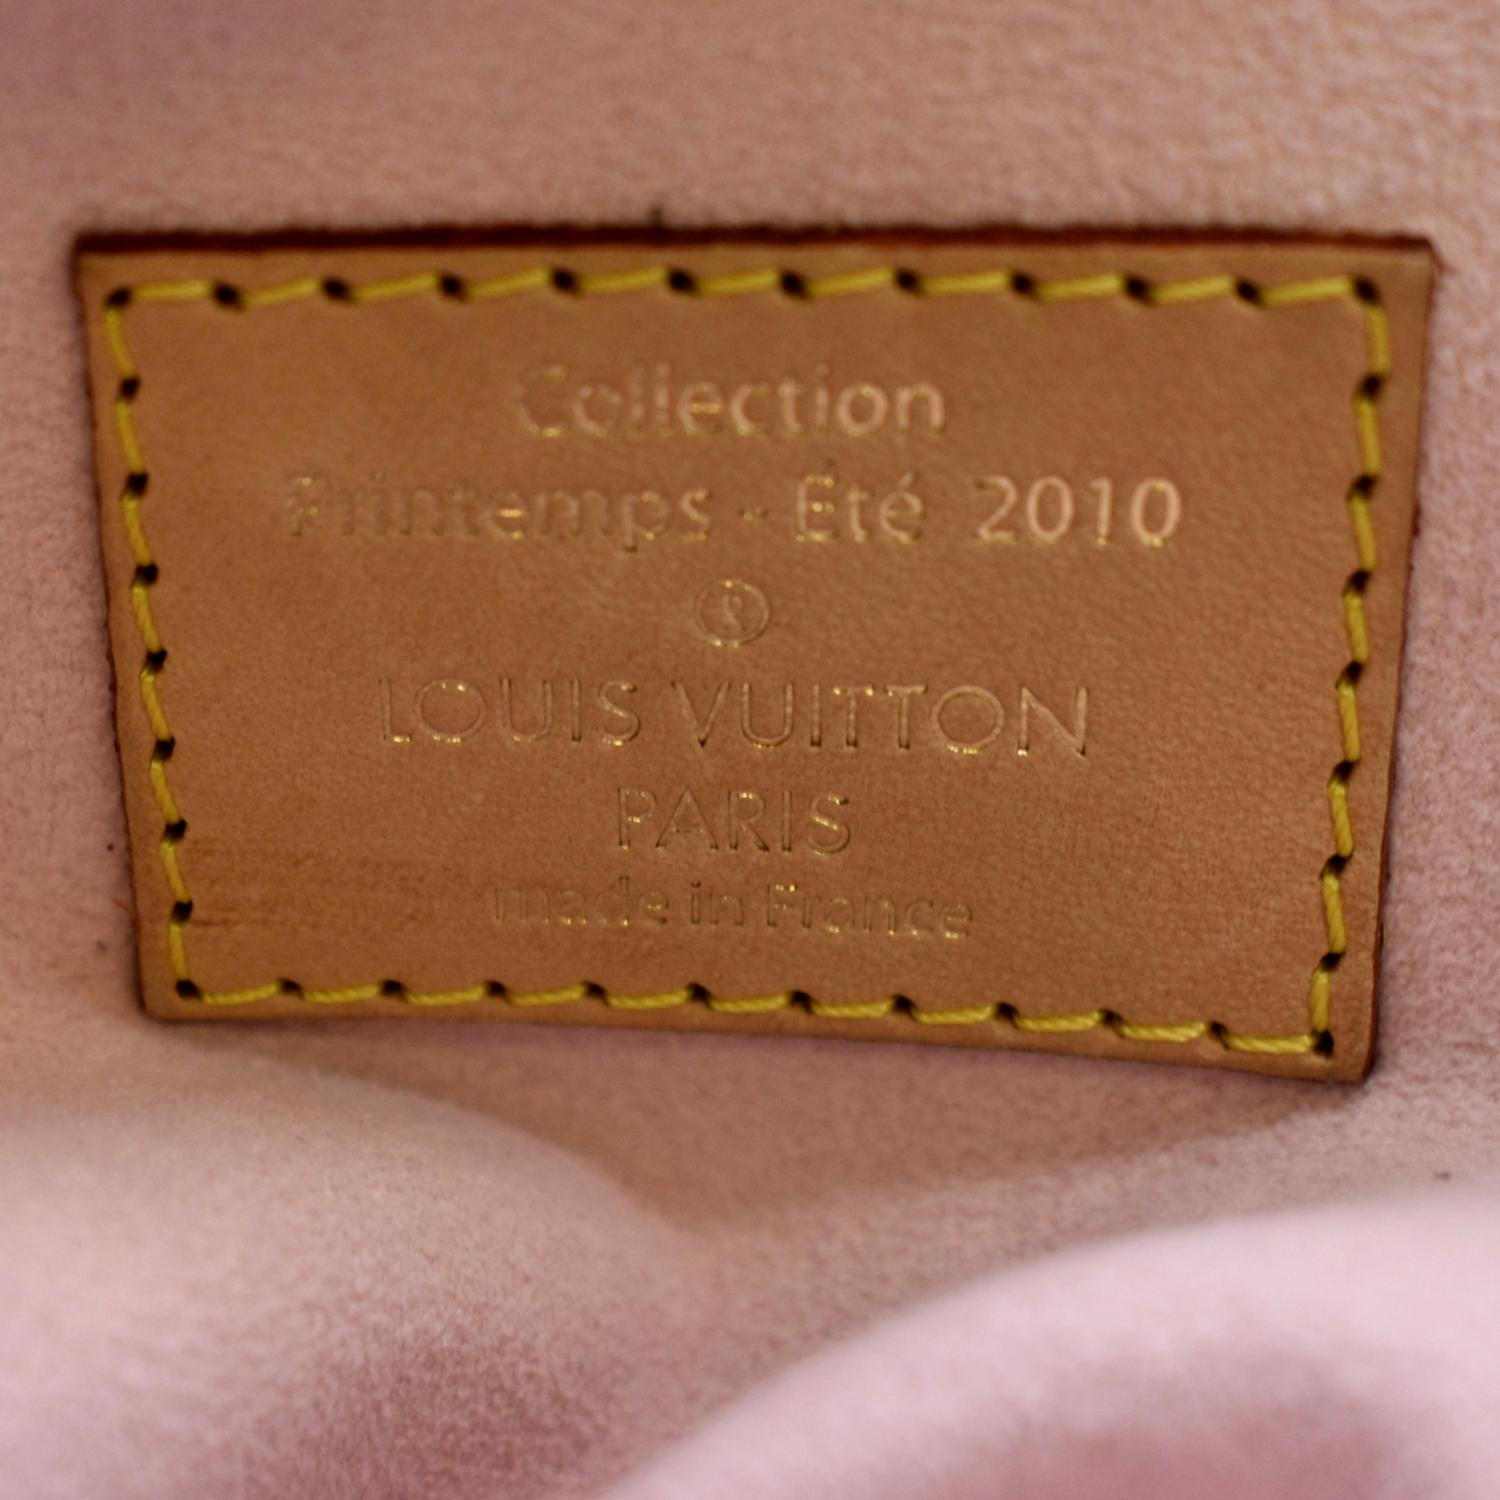 Louis Vuitton, Collection Printemps ETE